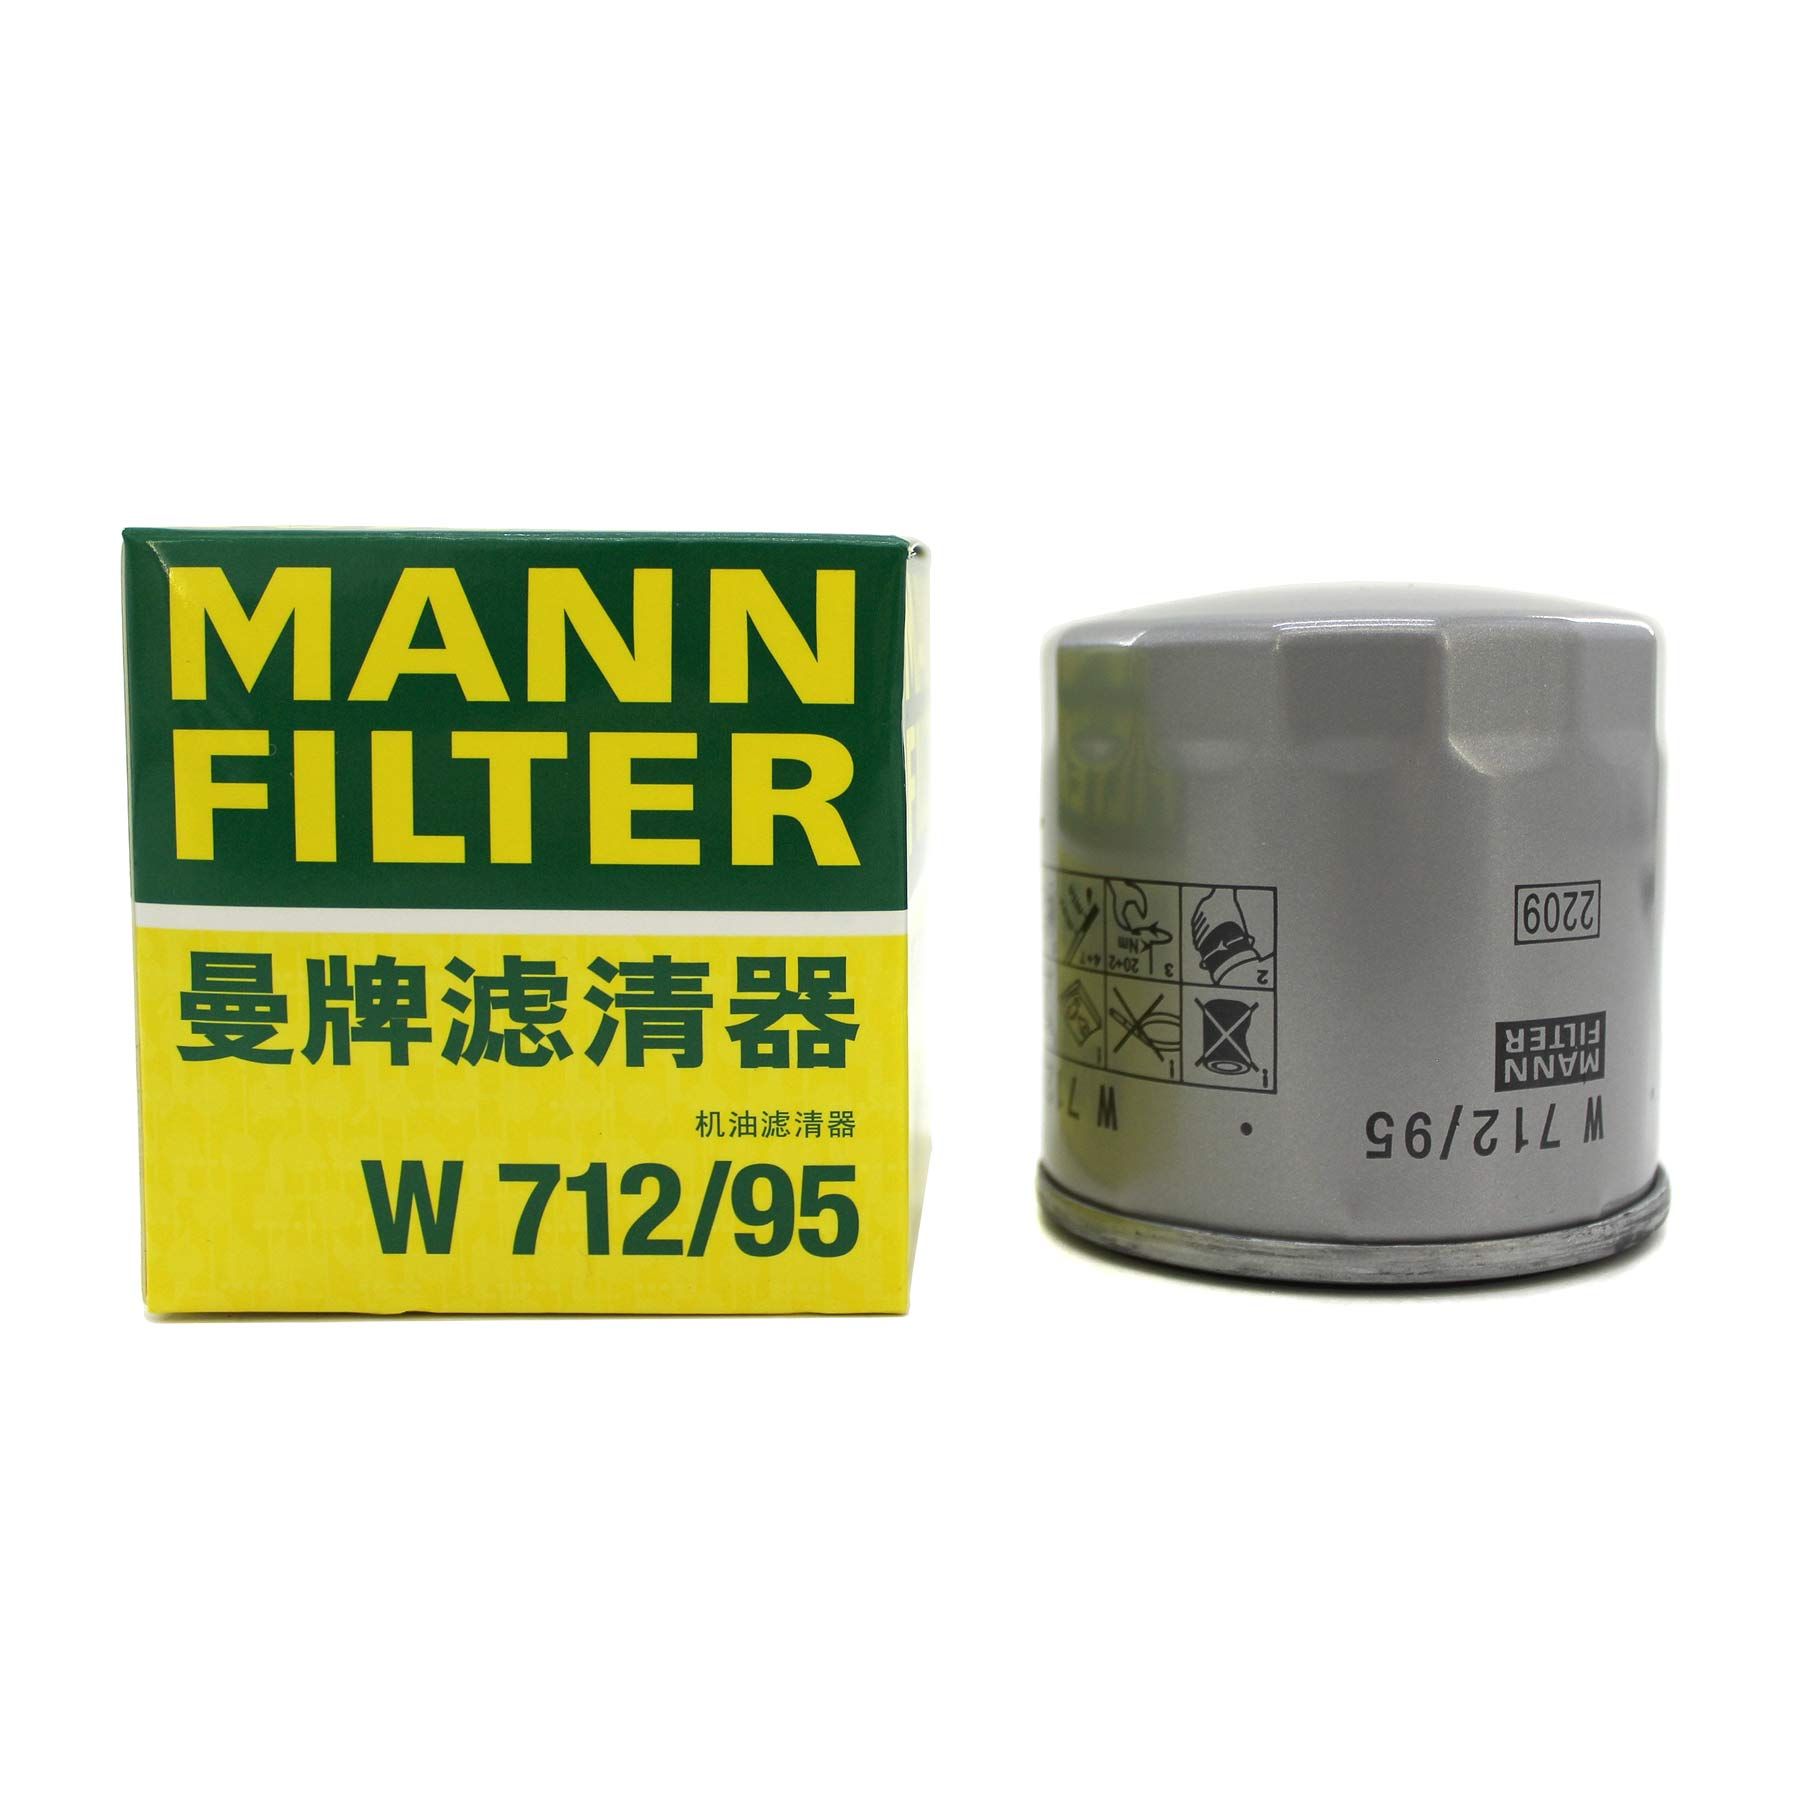 Купить фильтр масляный MANN-FILTER W712/95, цены на Мегамаркет | Артикул: 100022854000